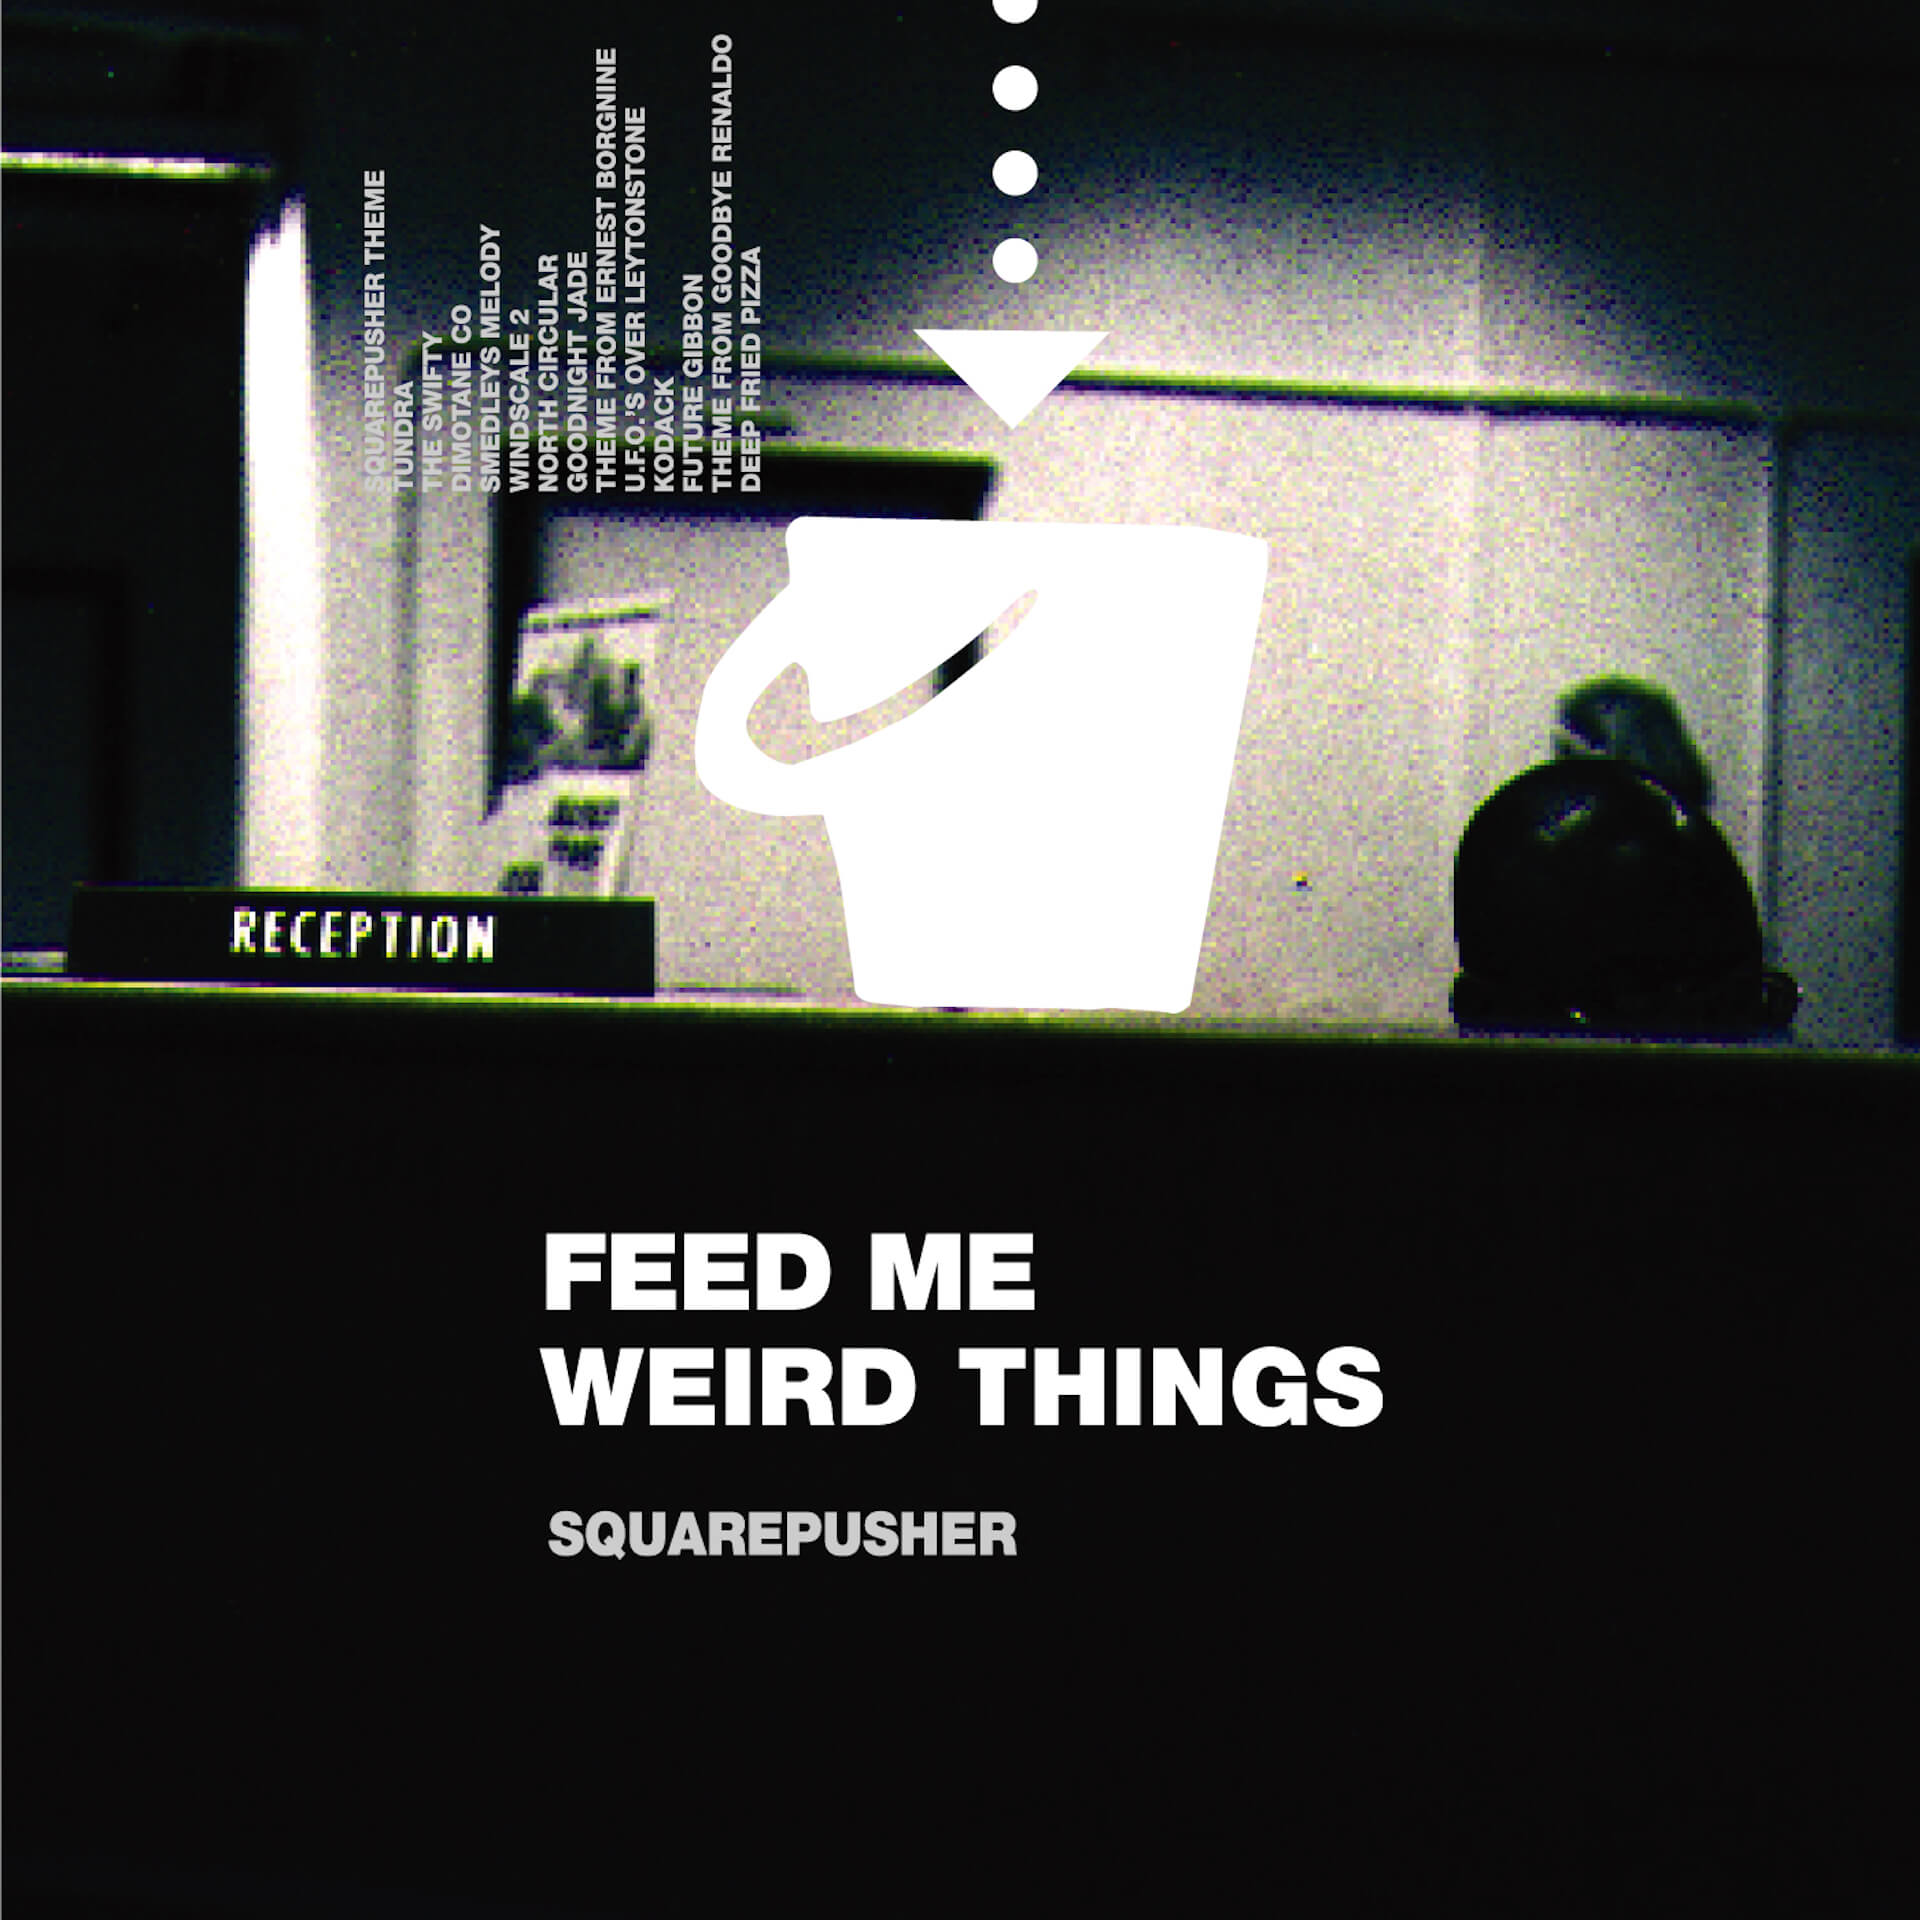 Squarepusher監修の再発盤『Feed Me Weird Things』がリリース間近！限定購入特典は"スクエアプッシング”パズル・キーホルダー music210526_squarepusher-2190526_13